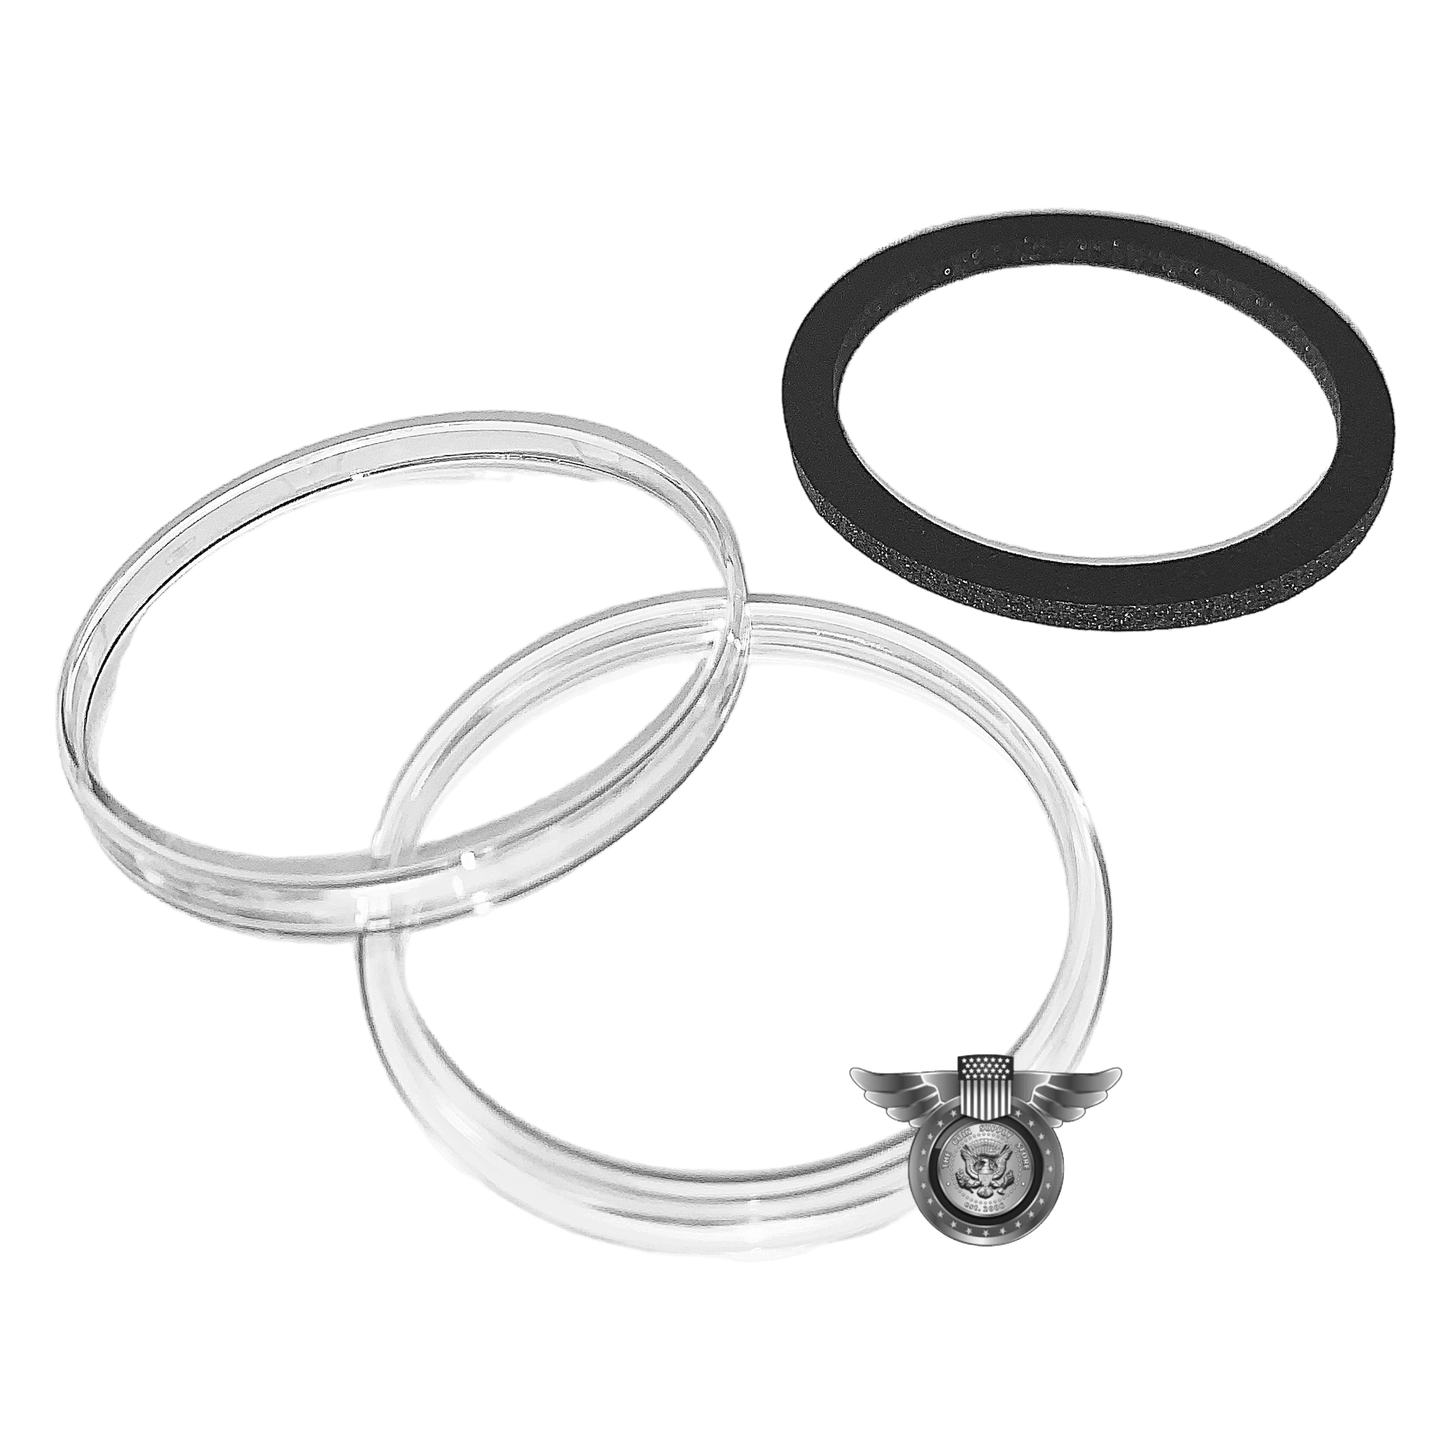 Ring Type Air-Tite Model I-Loop - 37mm Black (Ornament Holder)